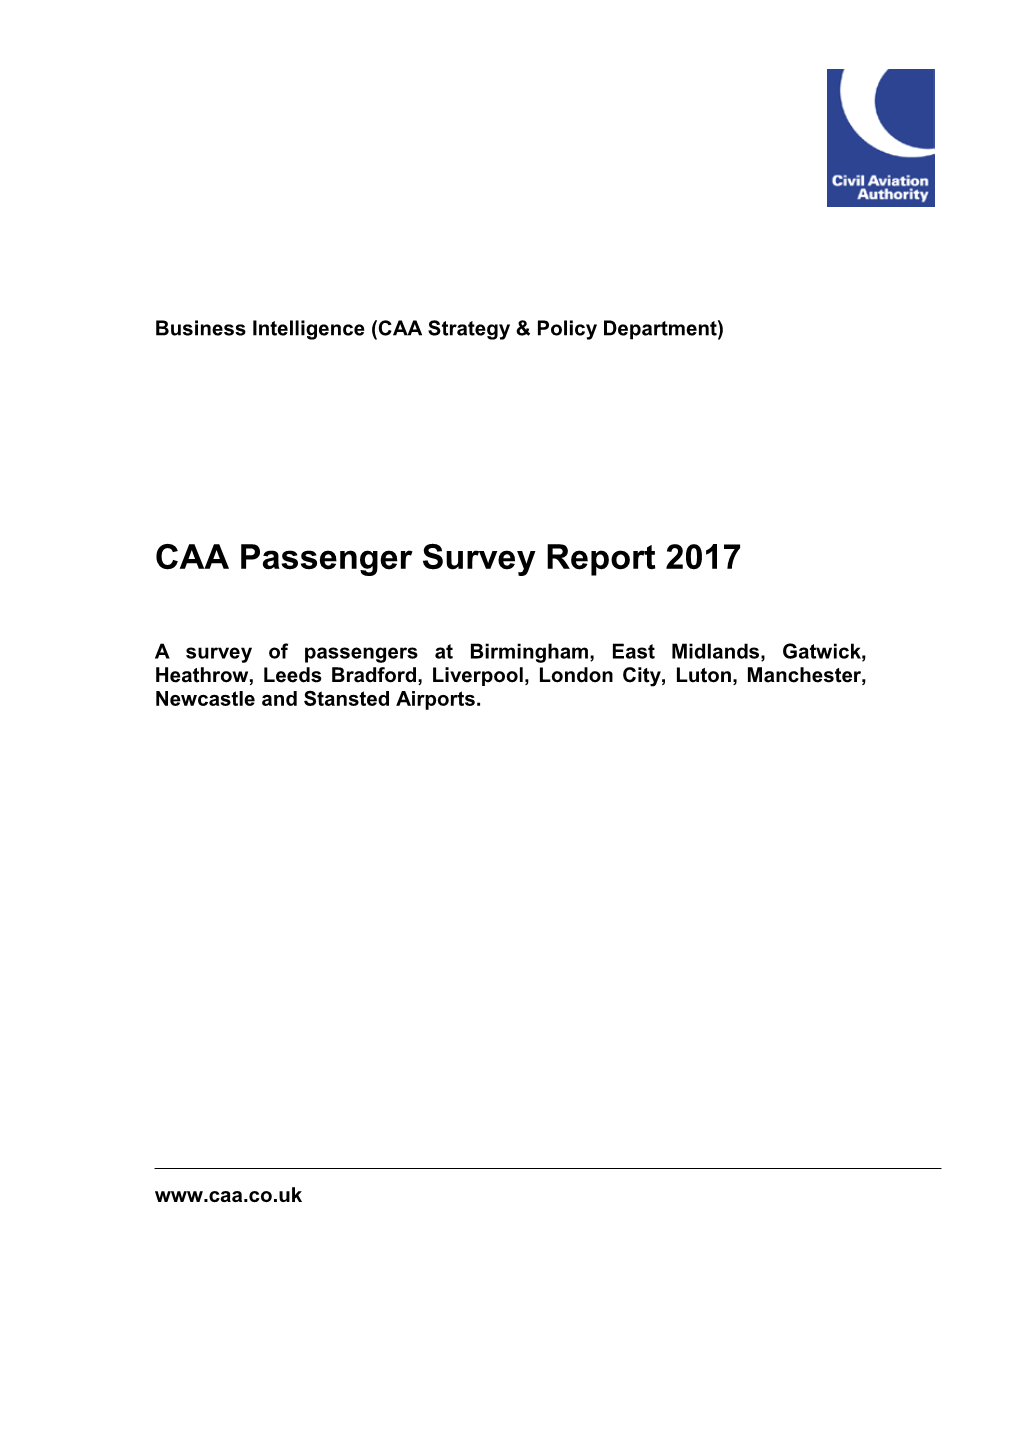 CAA Passenger Survey Report 2017